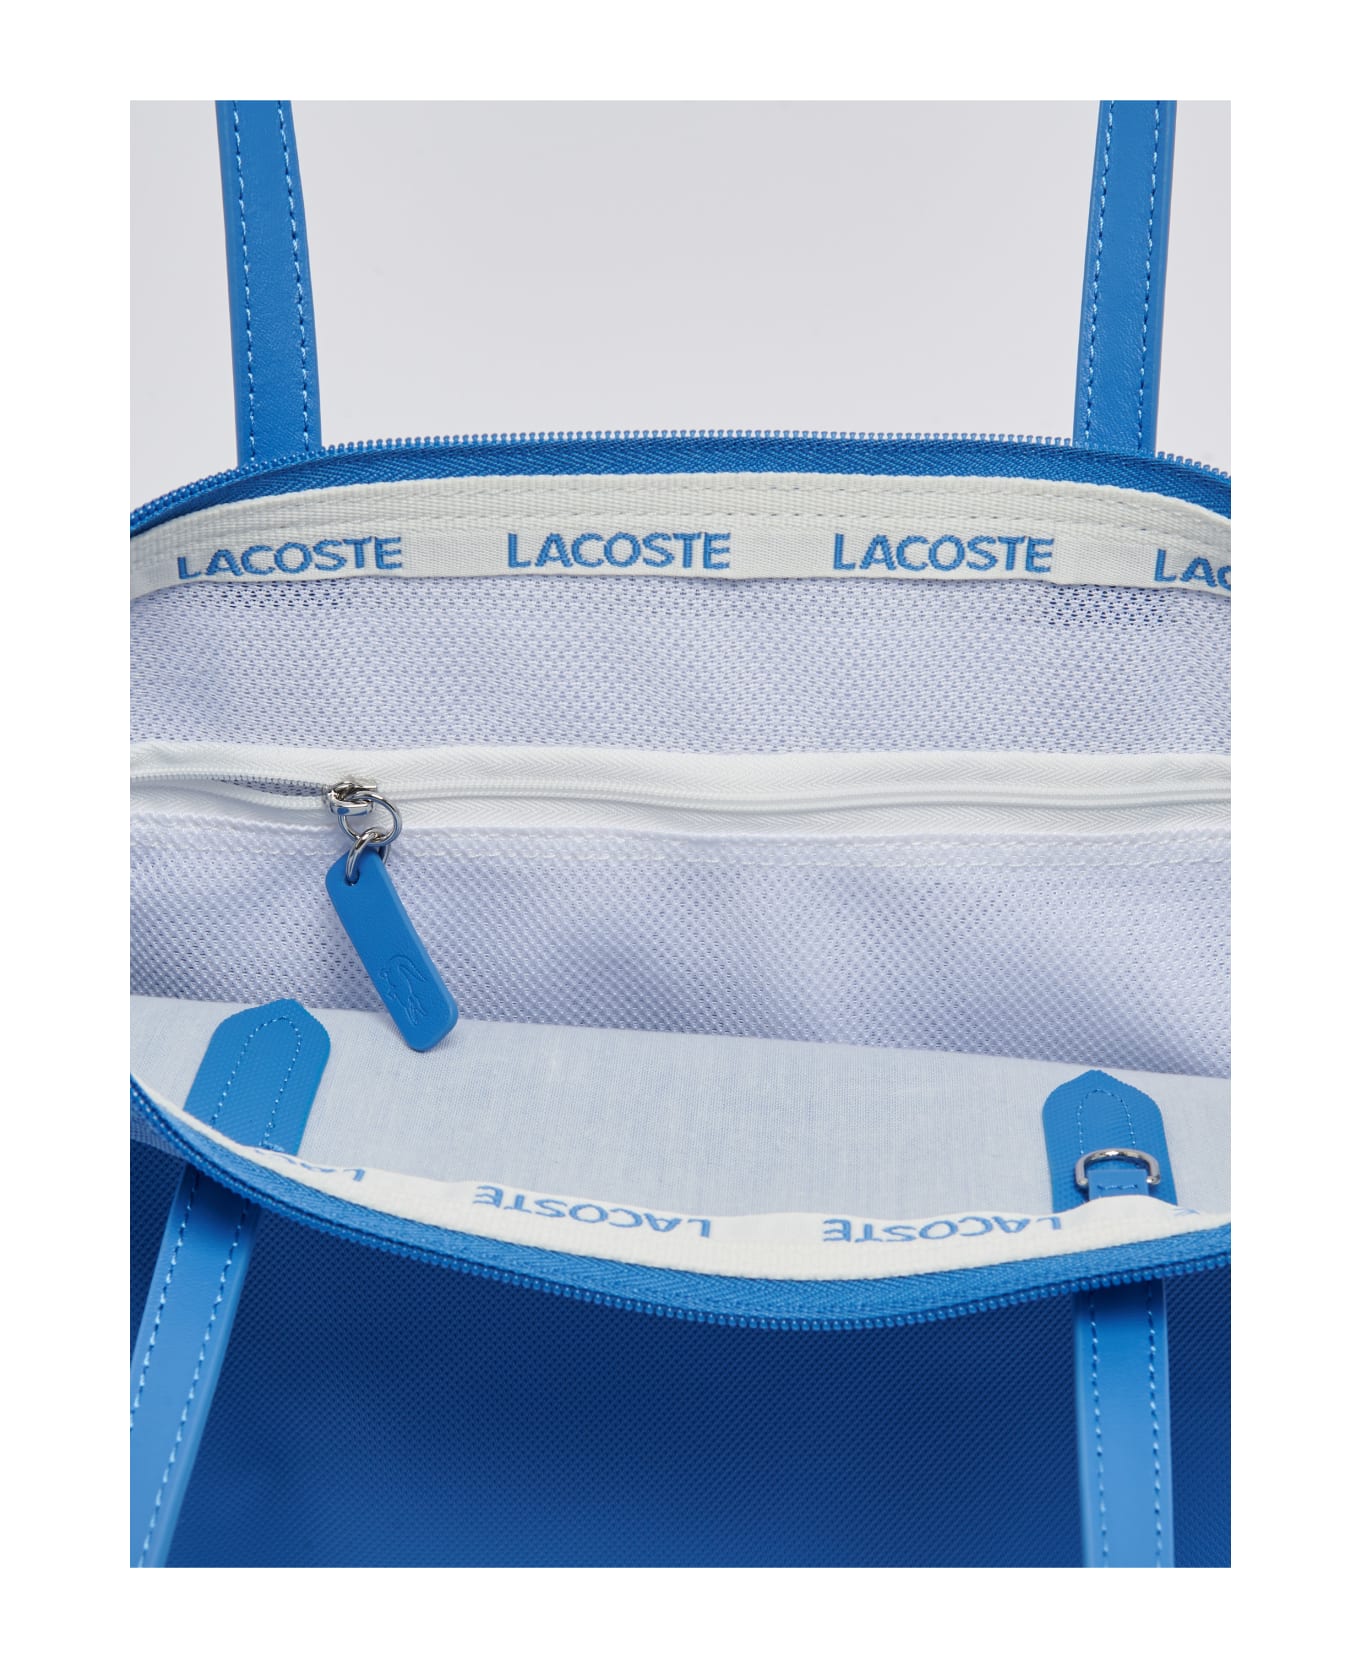 Lacoste Pvc Shopping Bag - AZZURRO トートバッグ